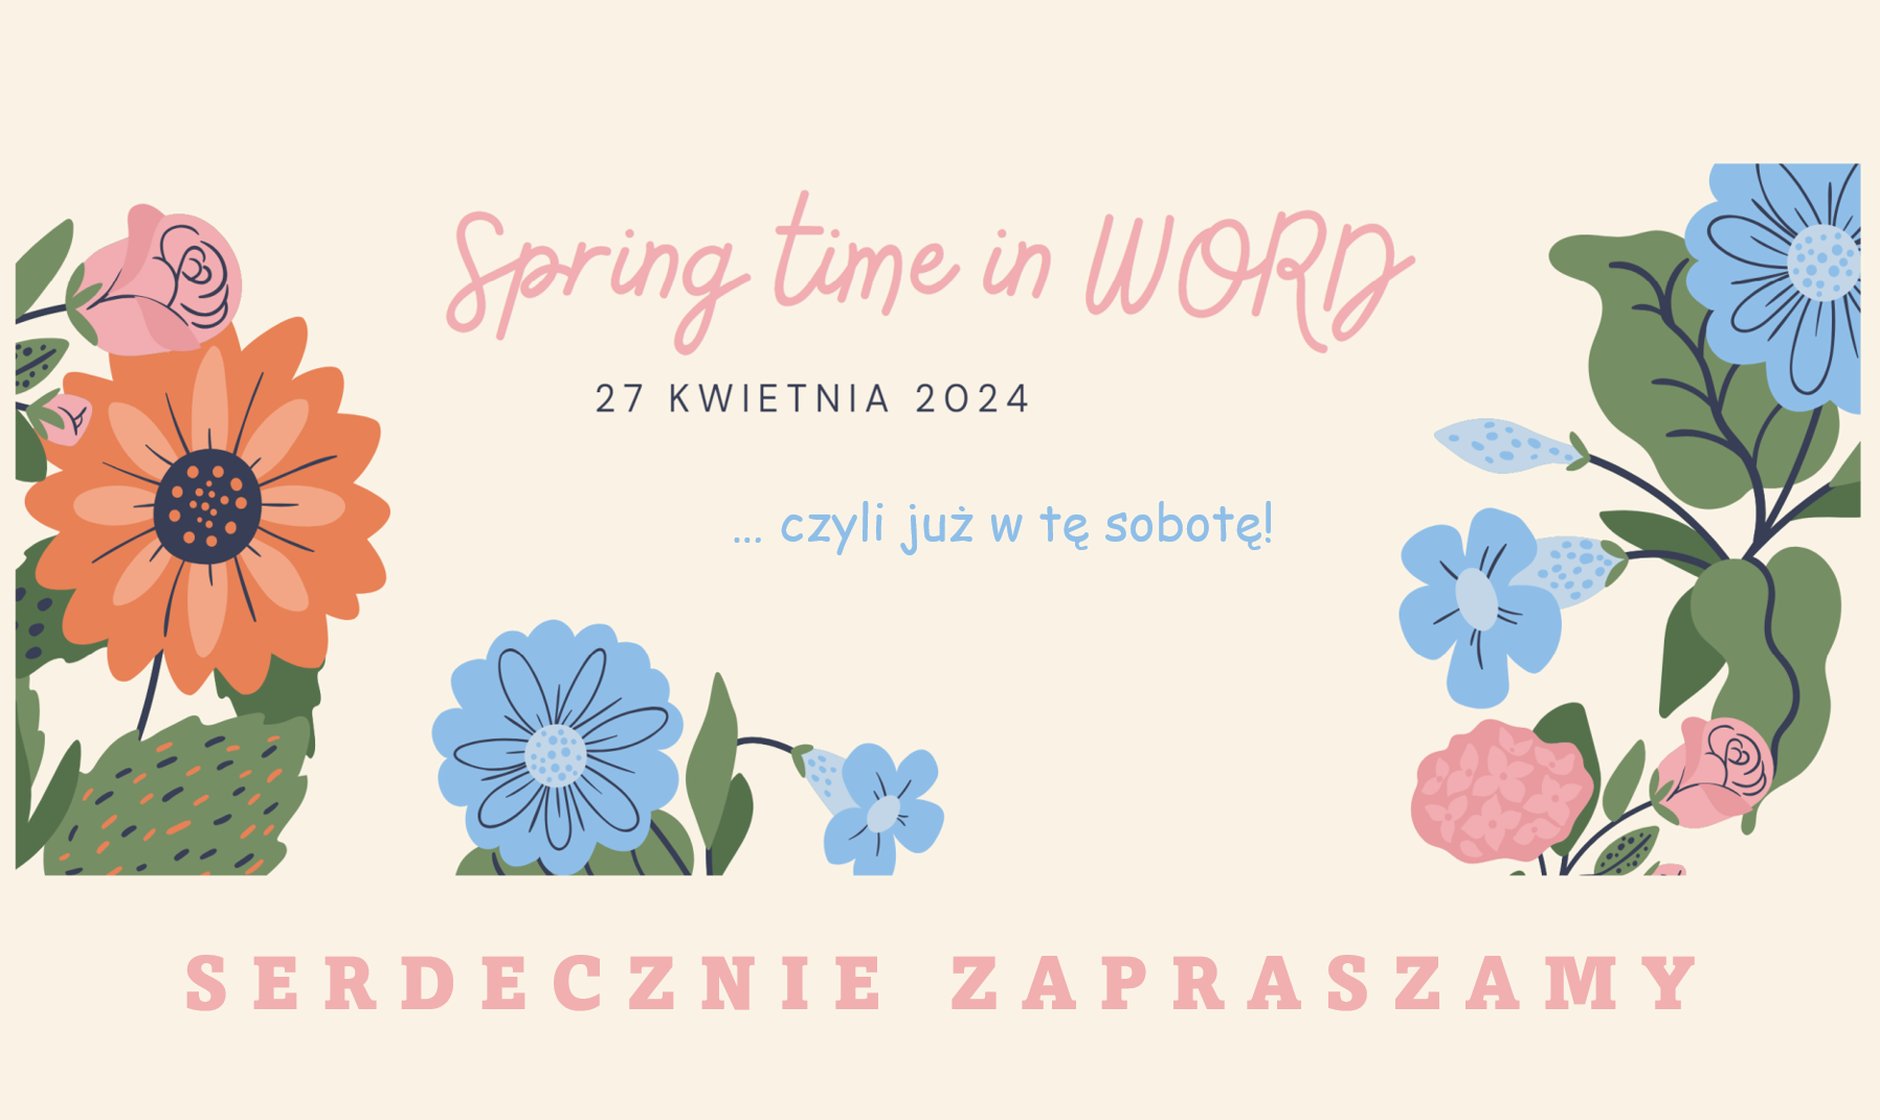 Spring time in Word - 27 kwietnia 2024